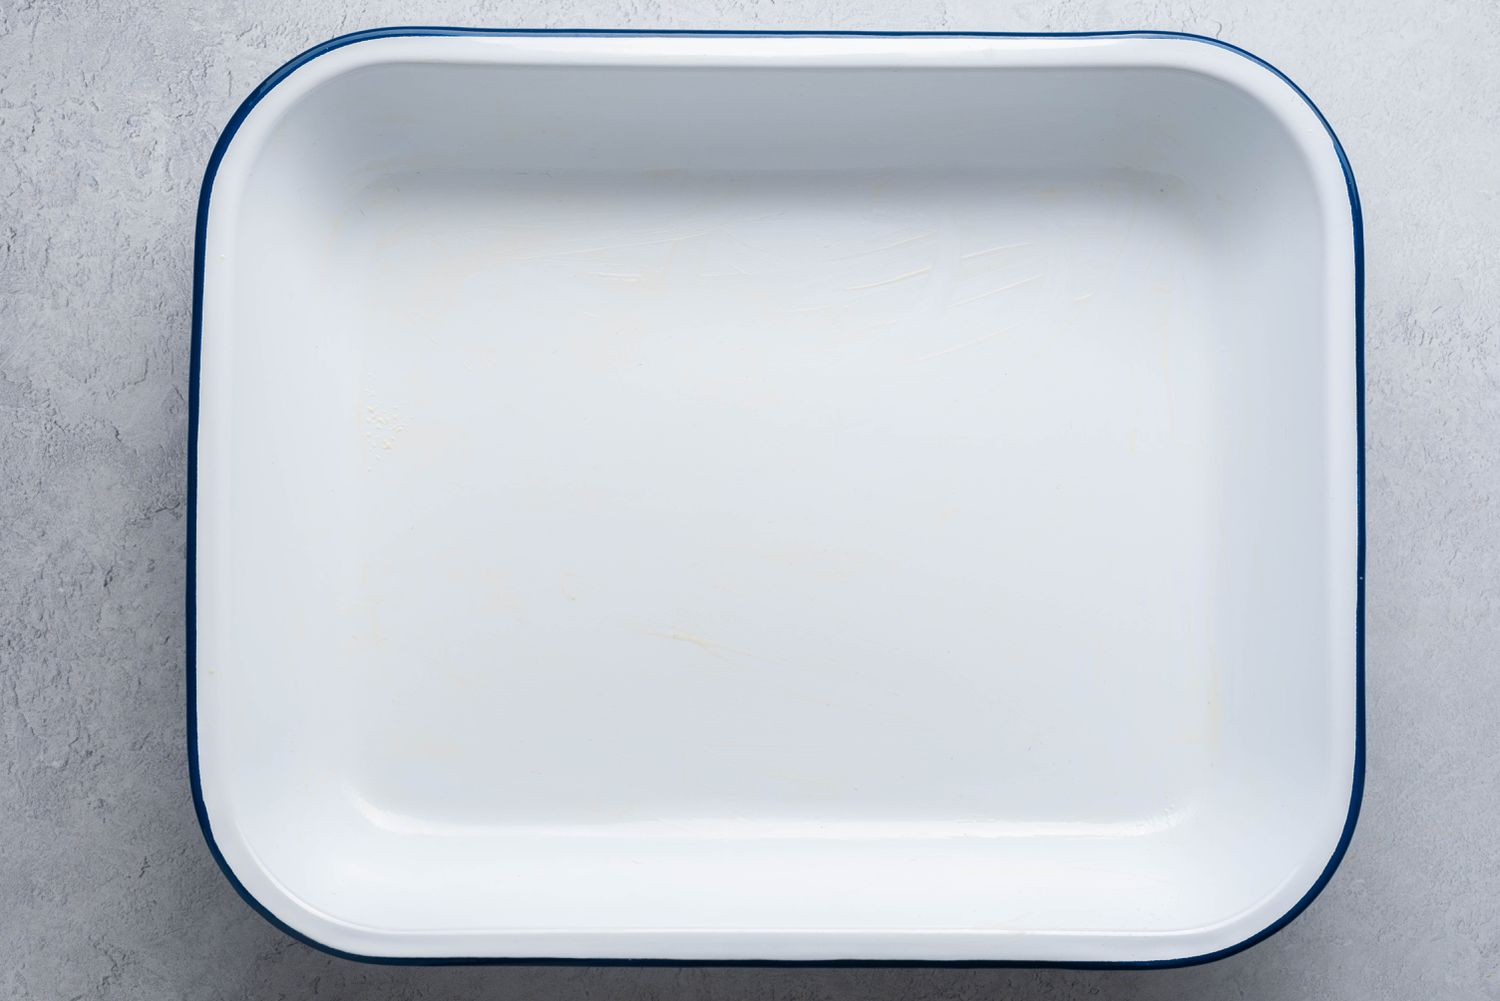 A white enamel 9x13 pan greased 